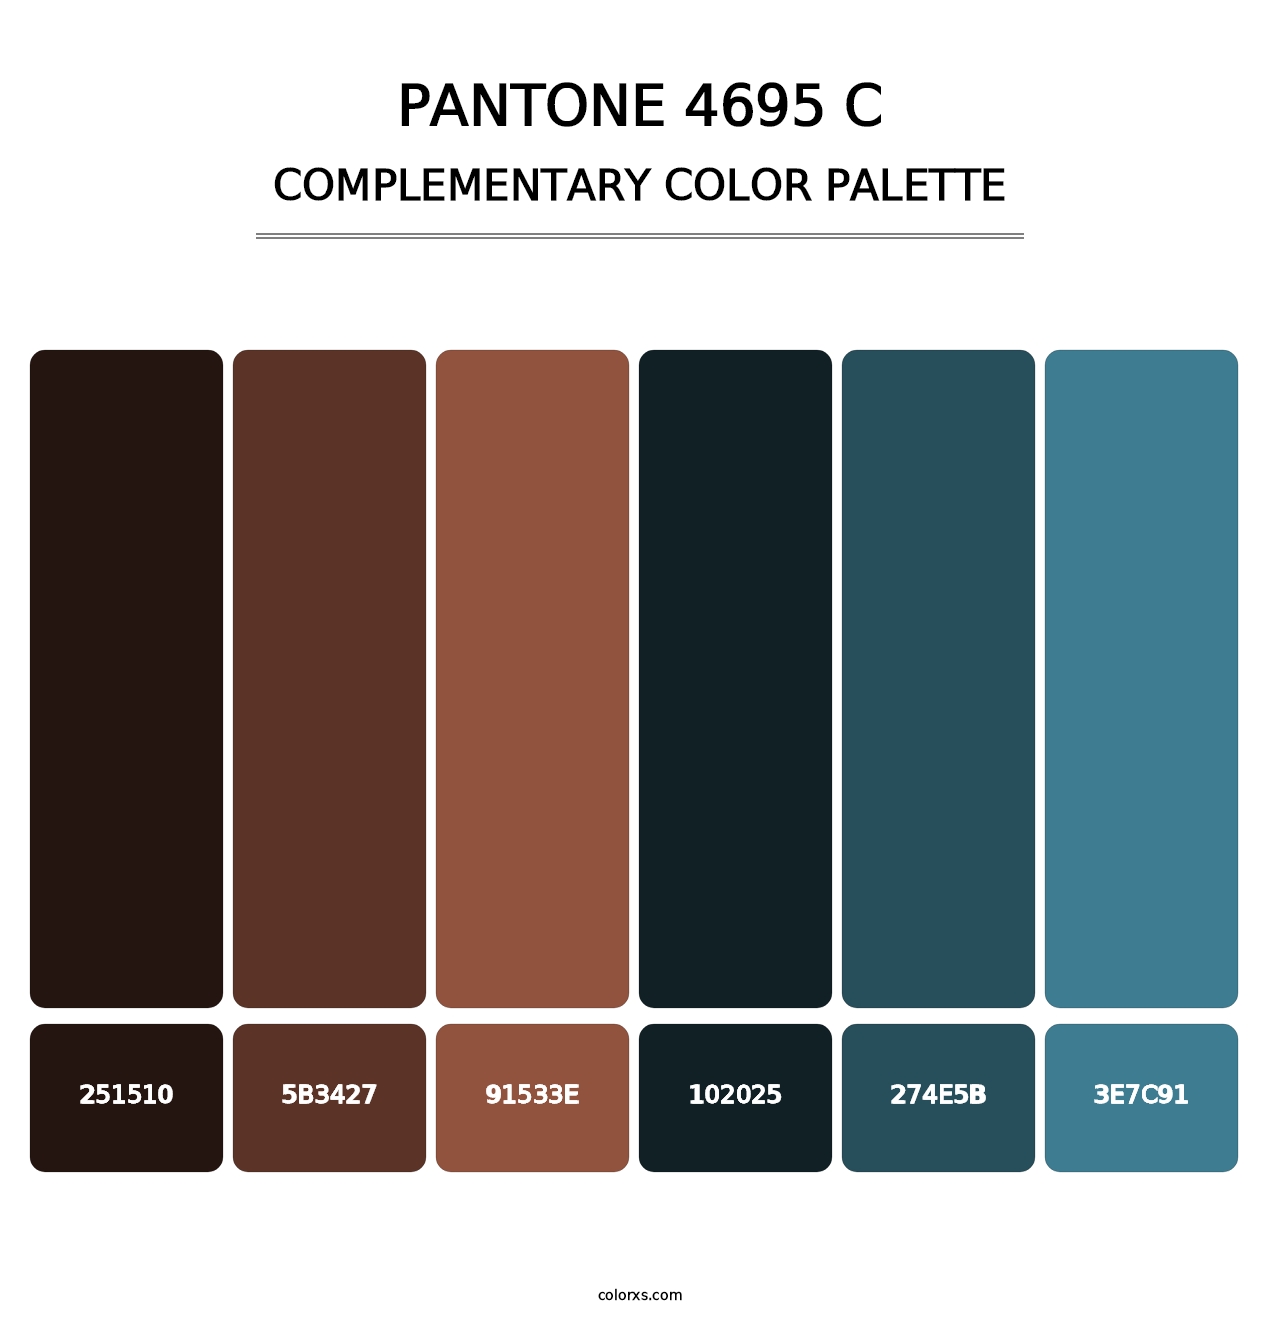 PANTONE 4695 C - Complementary Color Palette